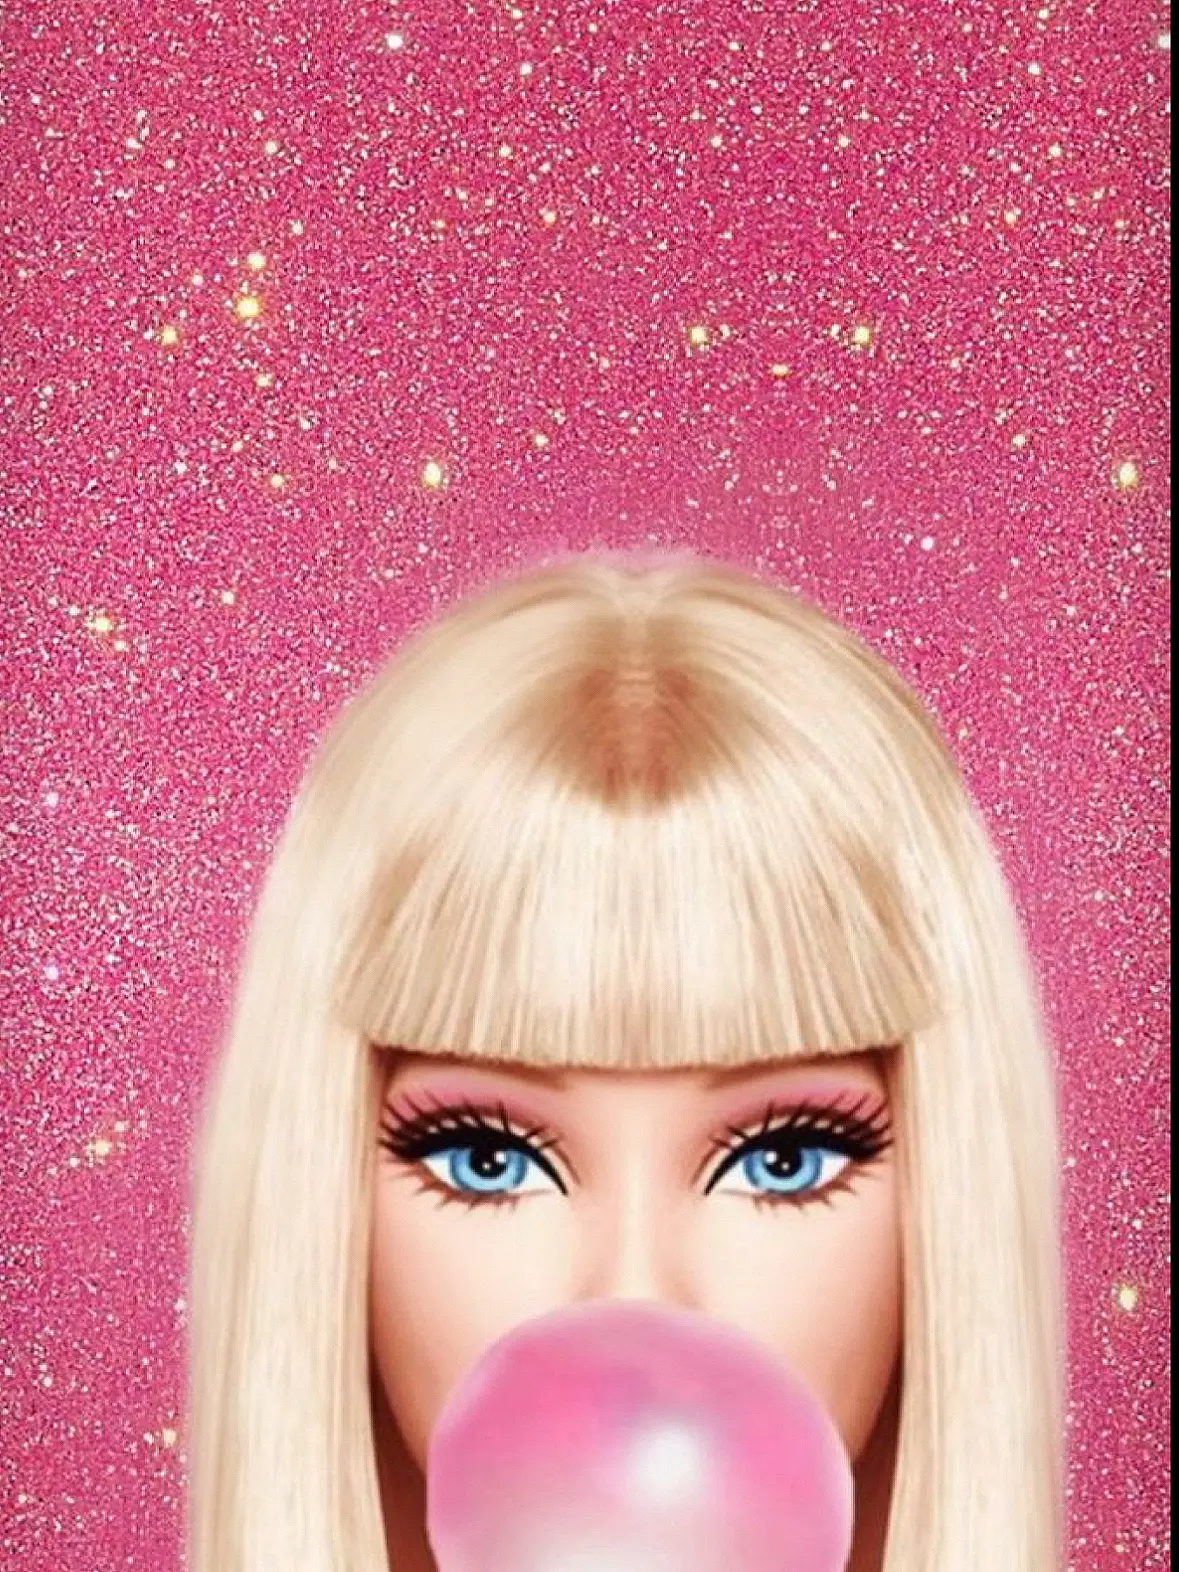 Barbie wallpaper